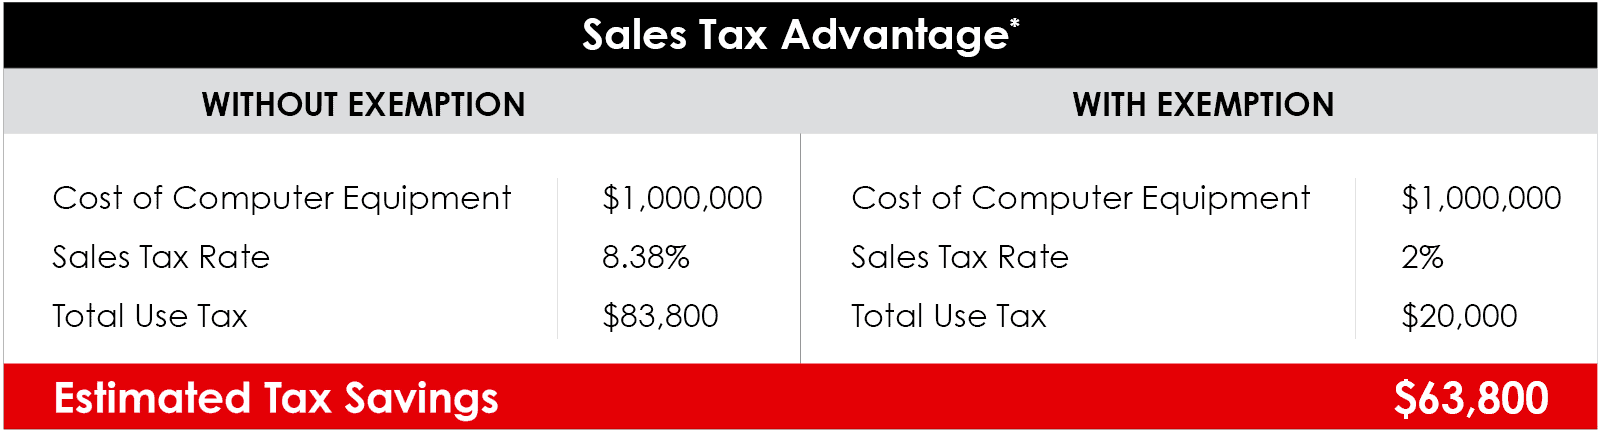 Nevada Sales Tax Advantage | $63,800 Estimated Tax Savings